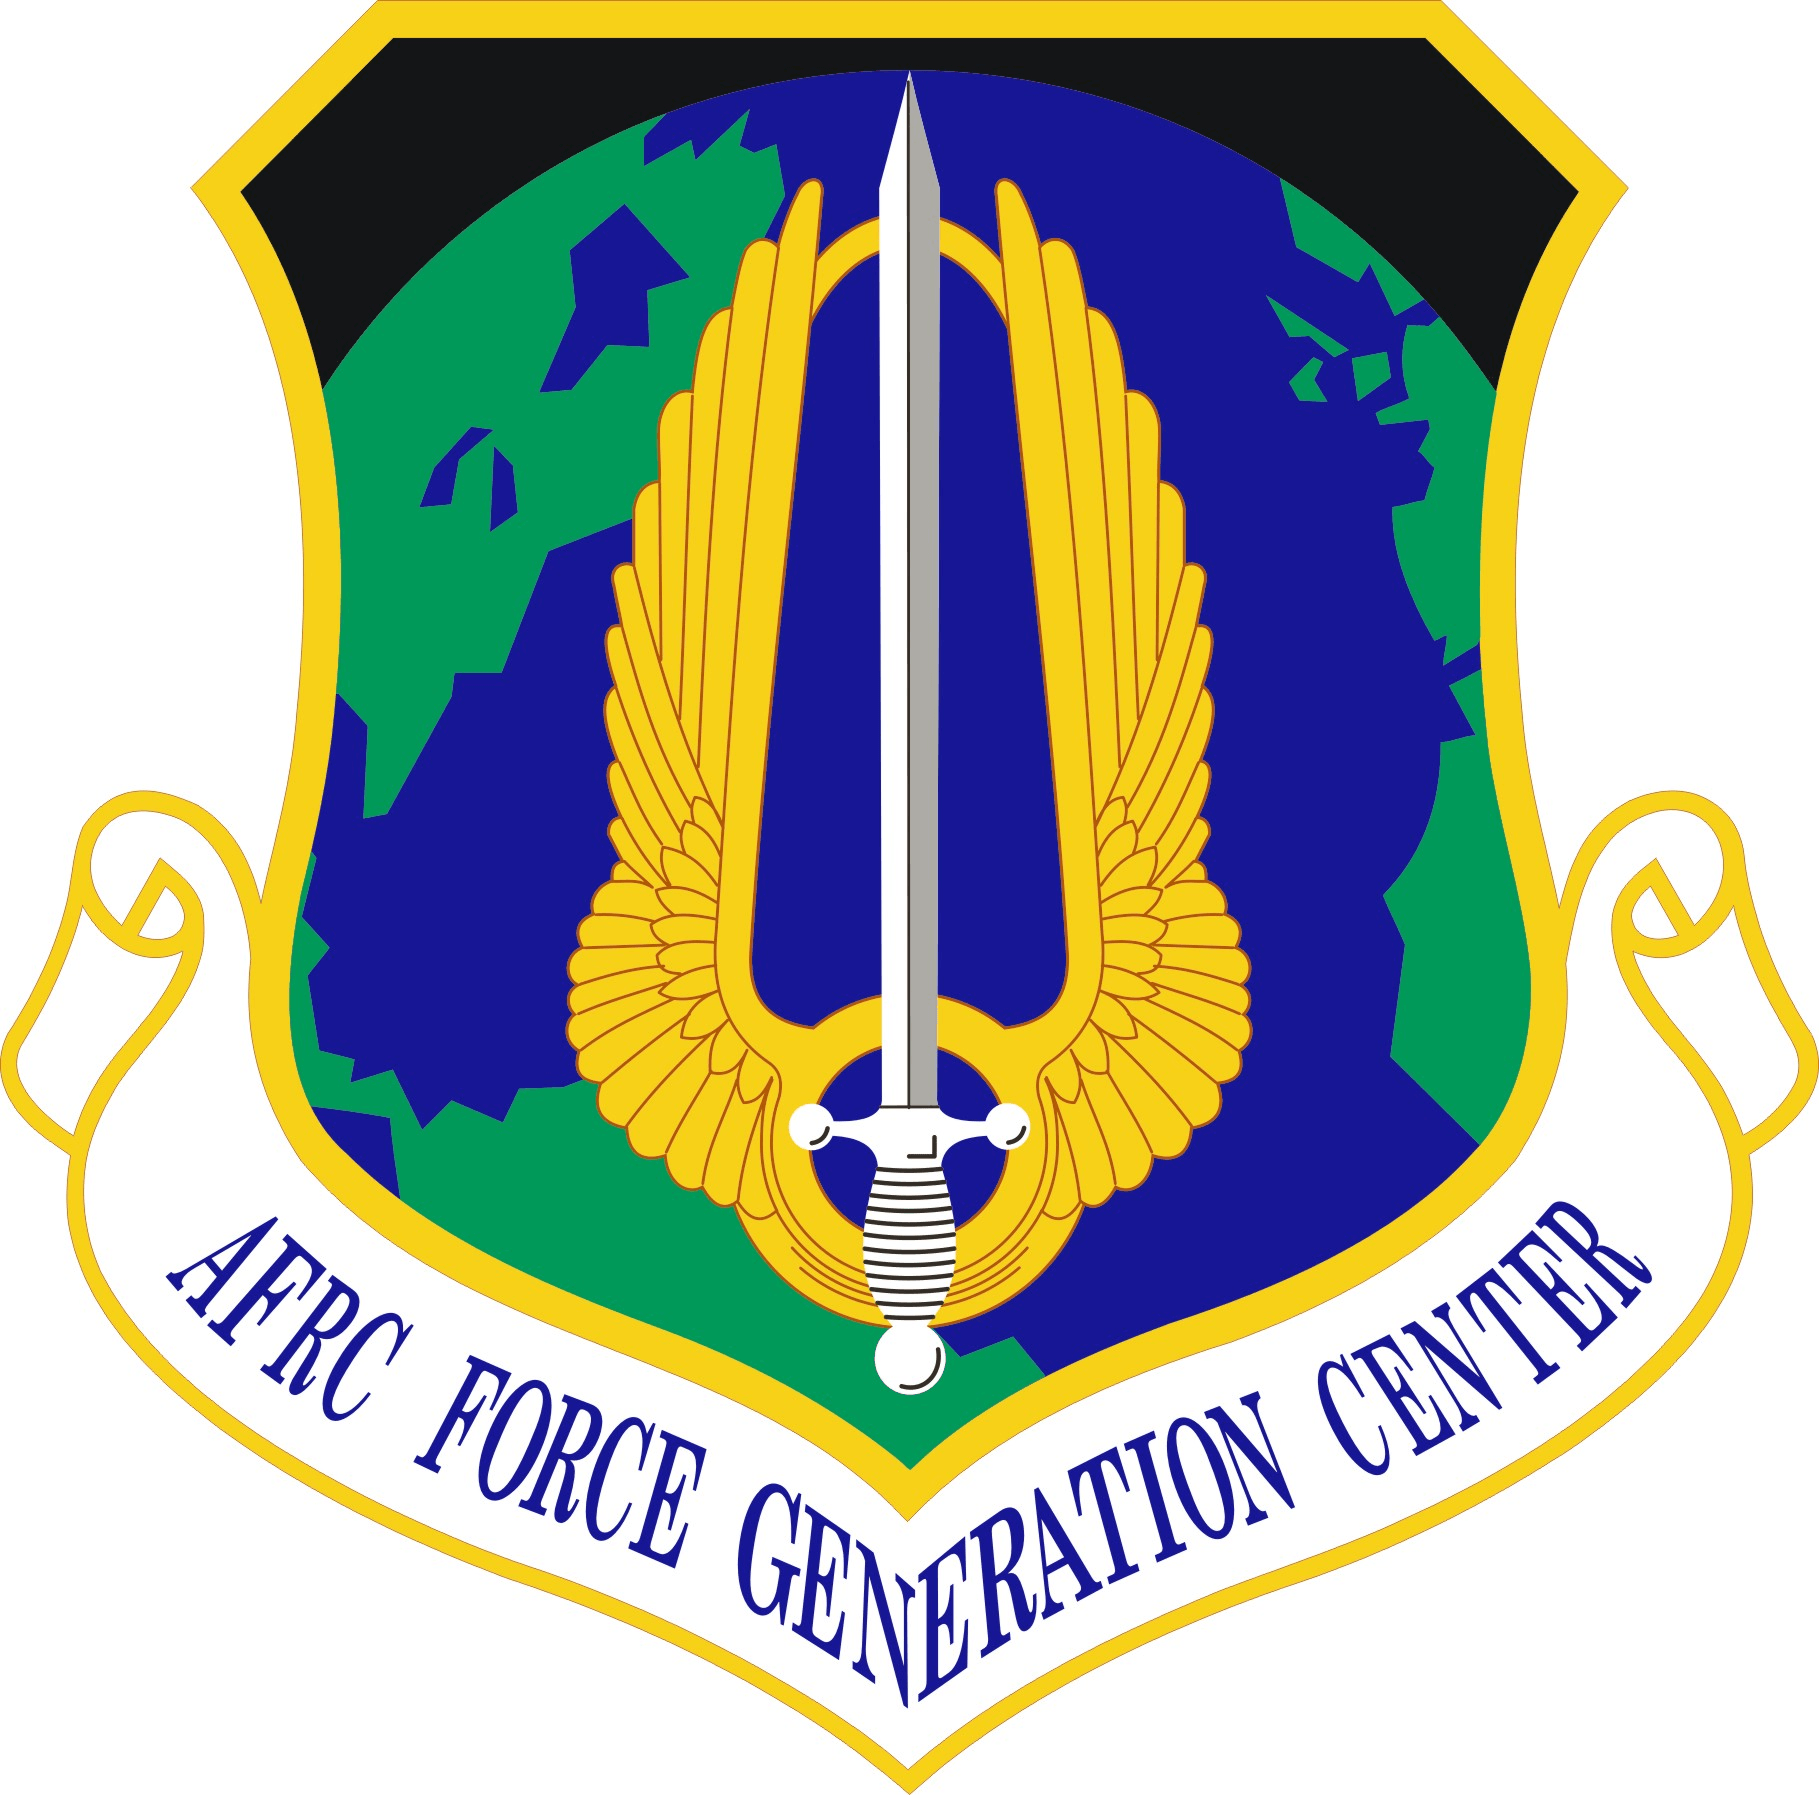 Afrc Logo - Air Force Reserve Command Force Generation Ctr emblem.png